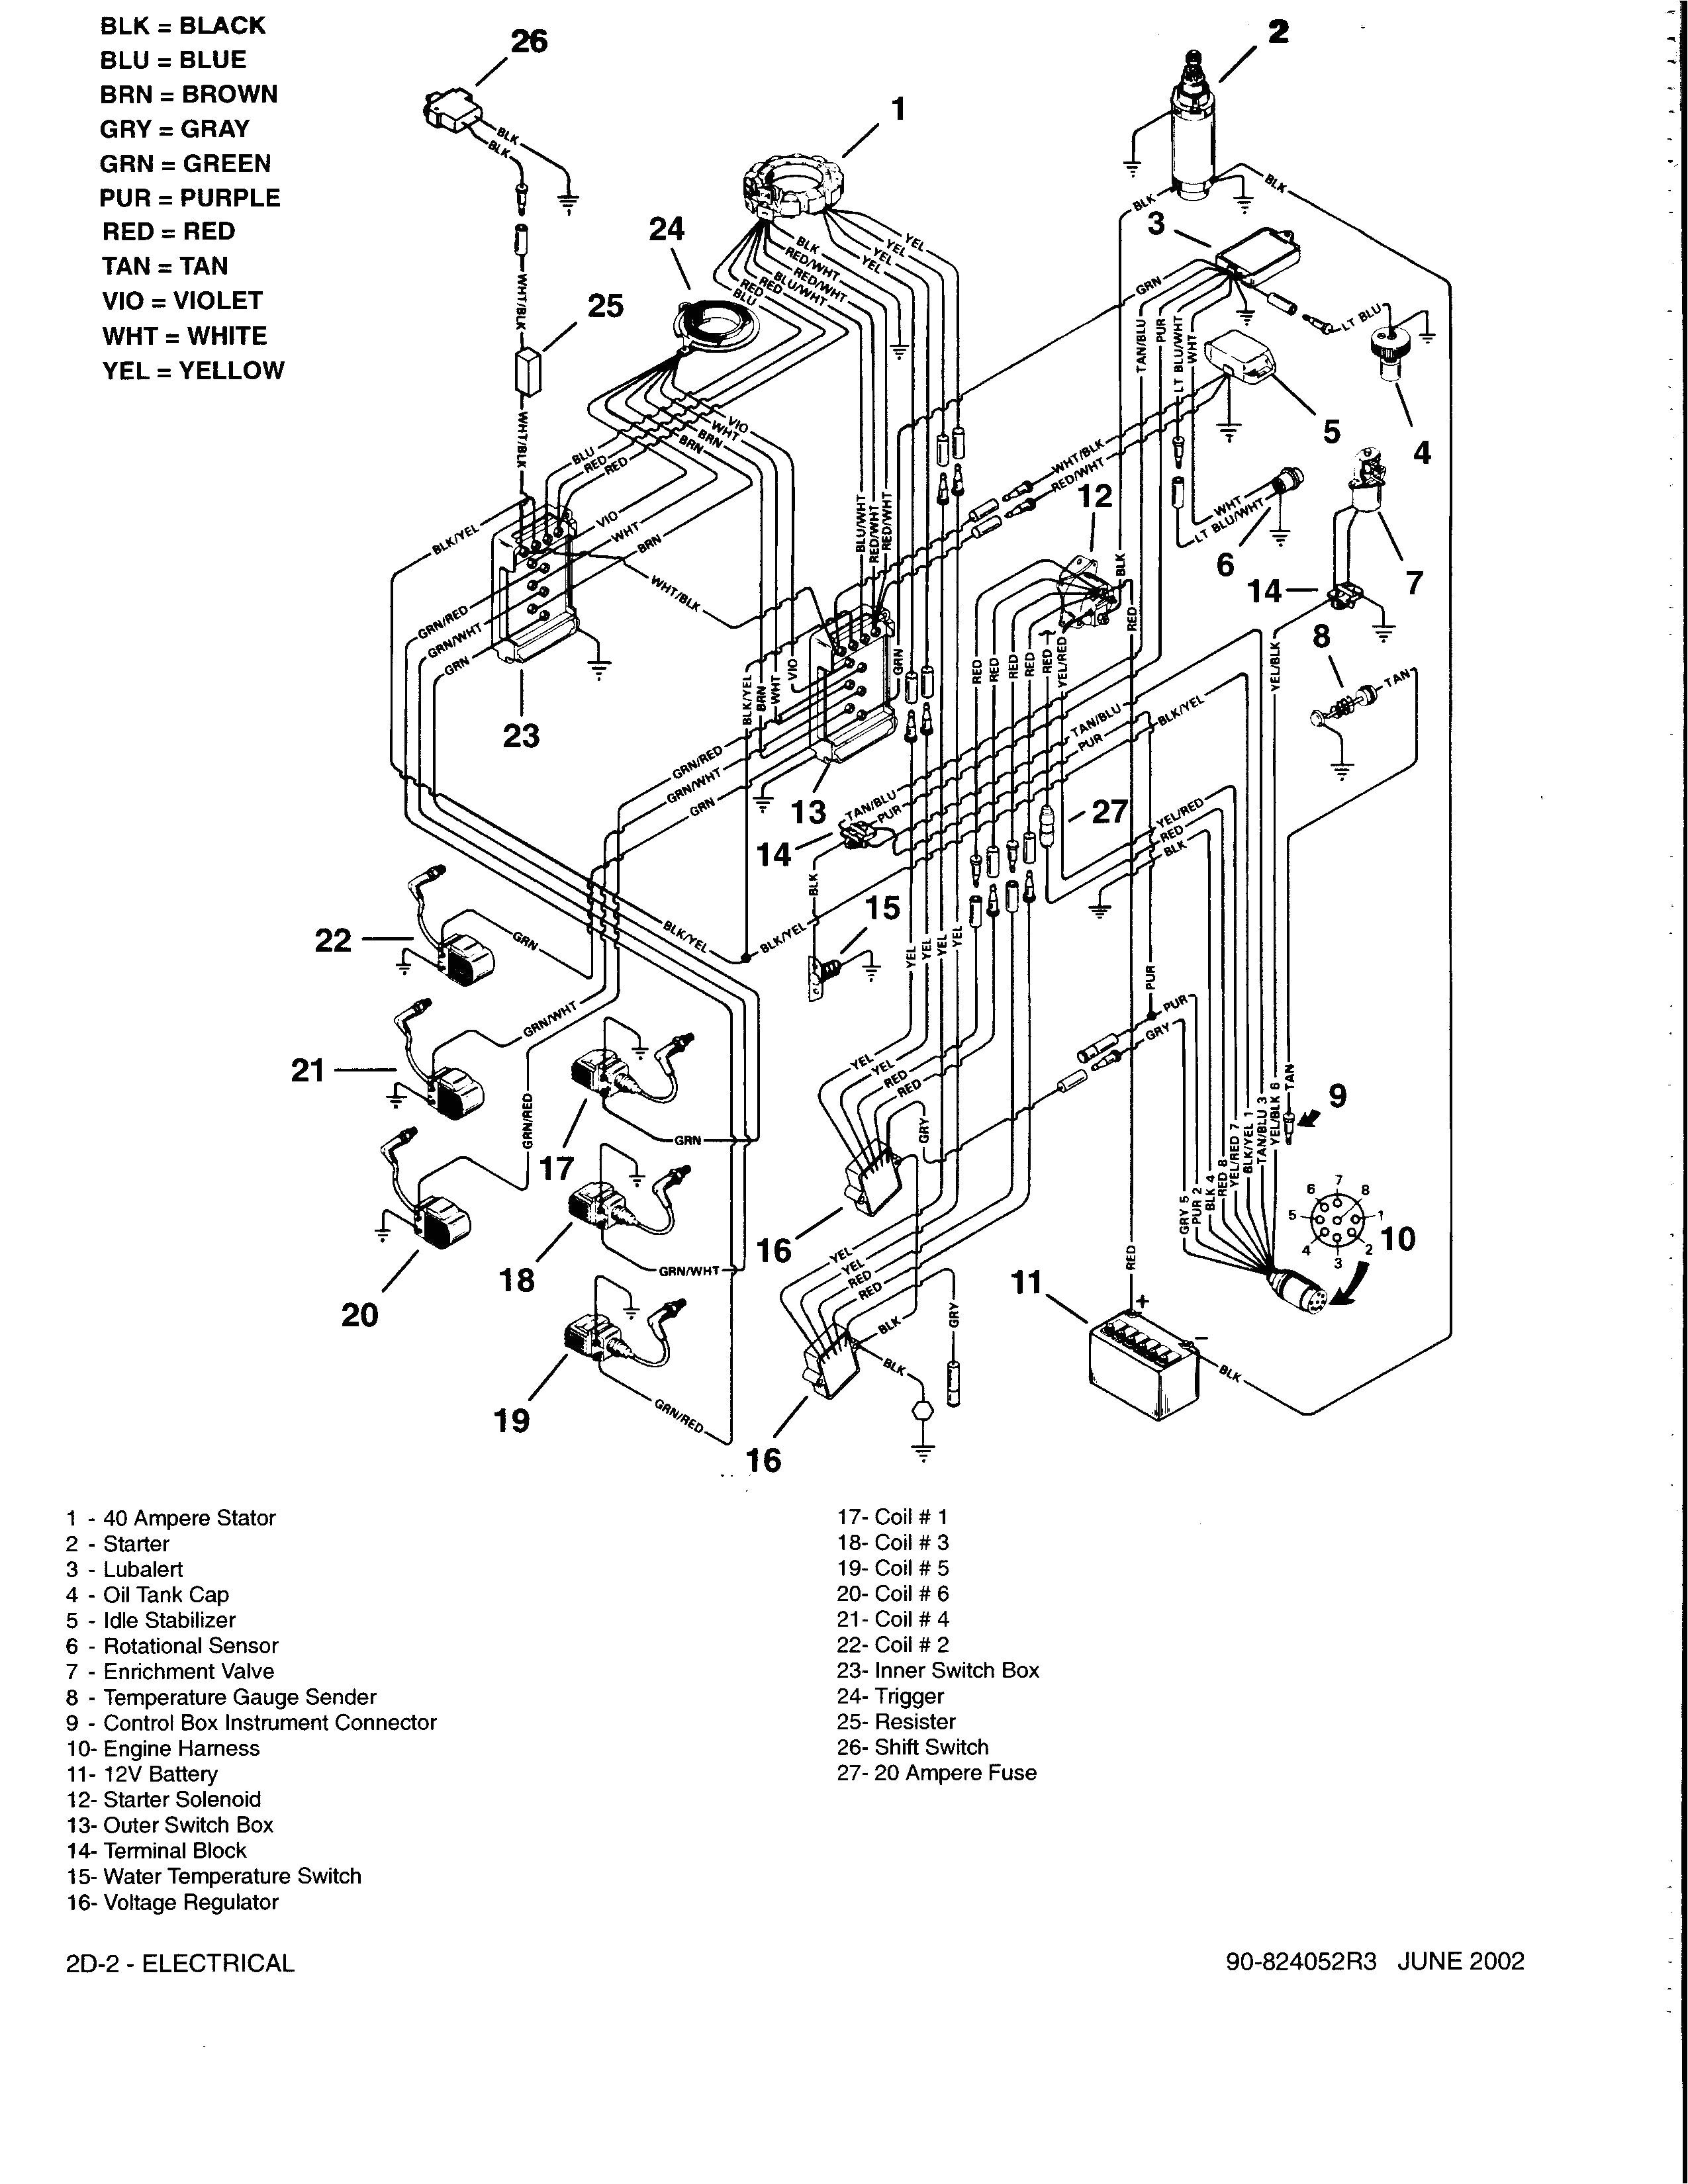 rj11 connector wiring diagram